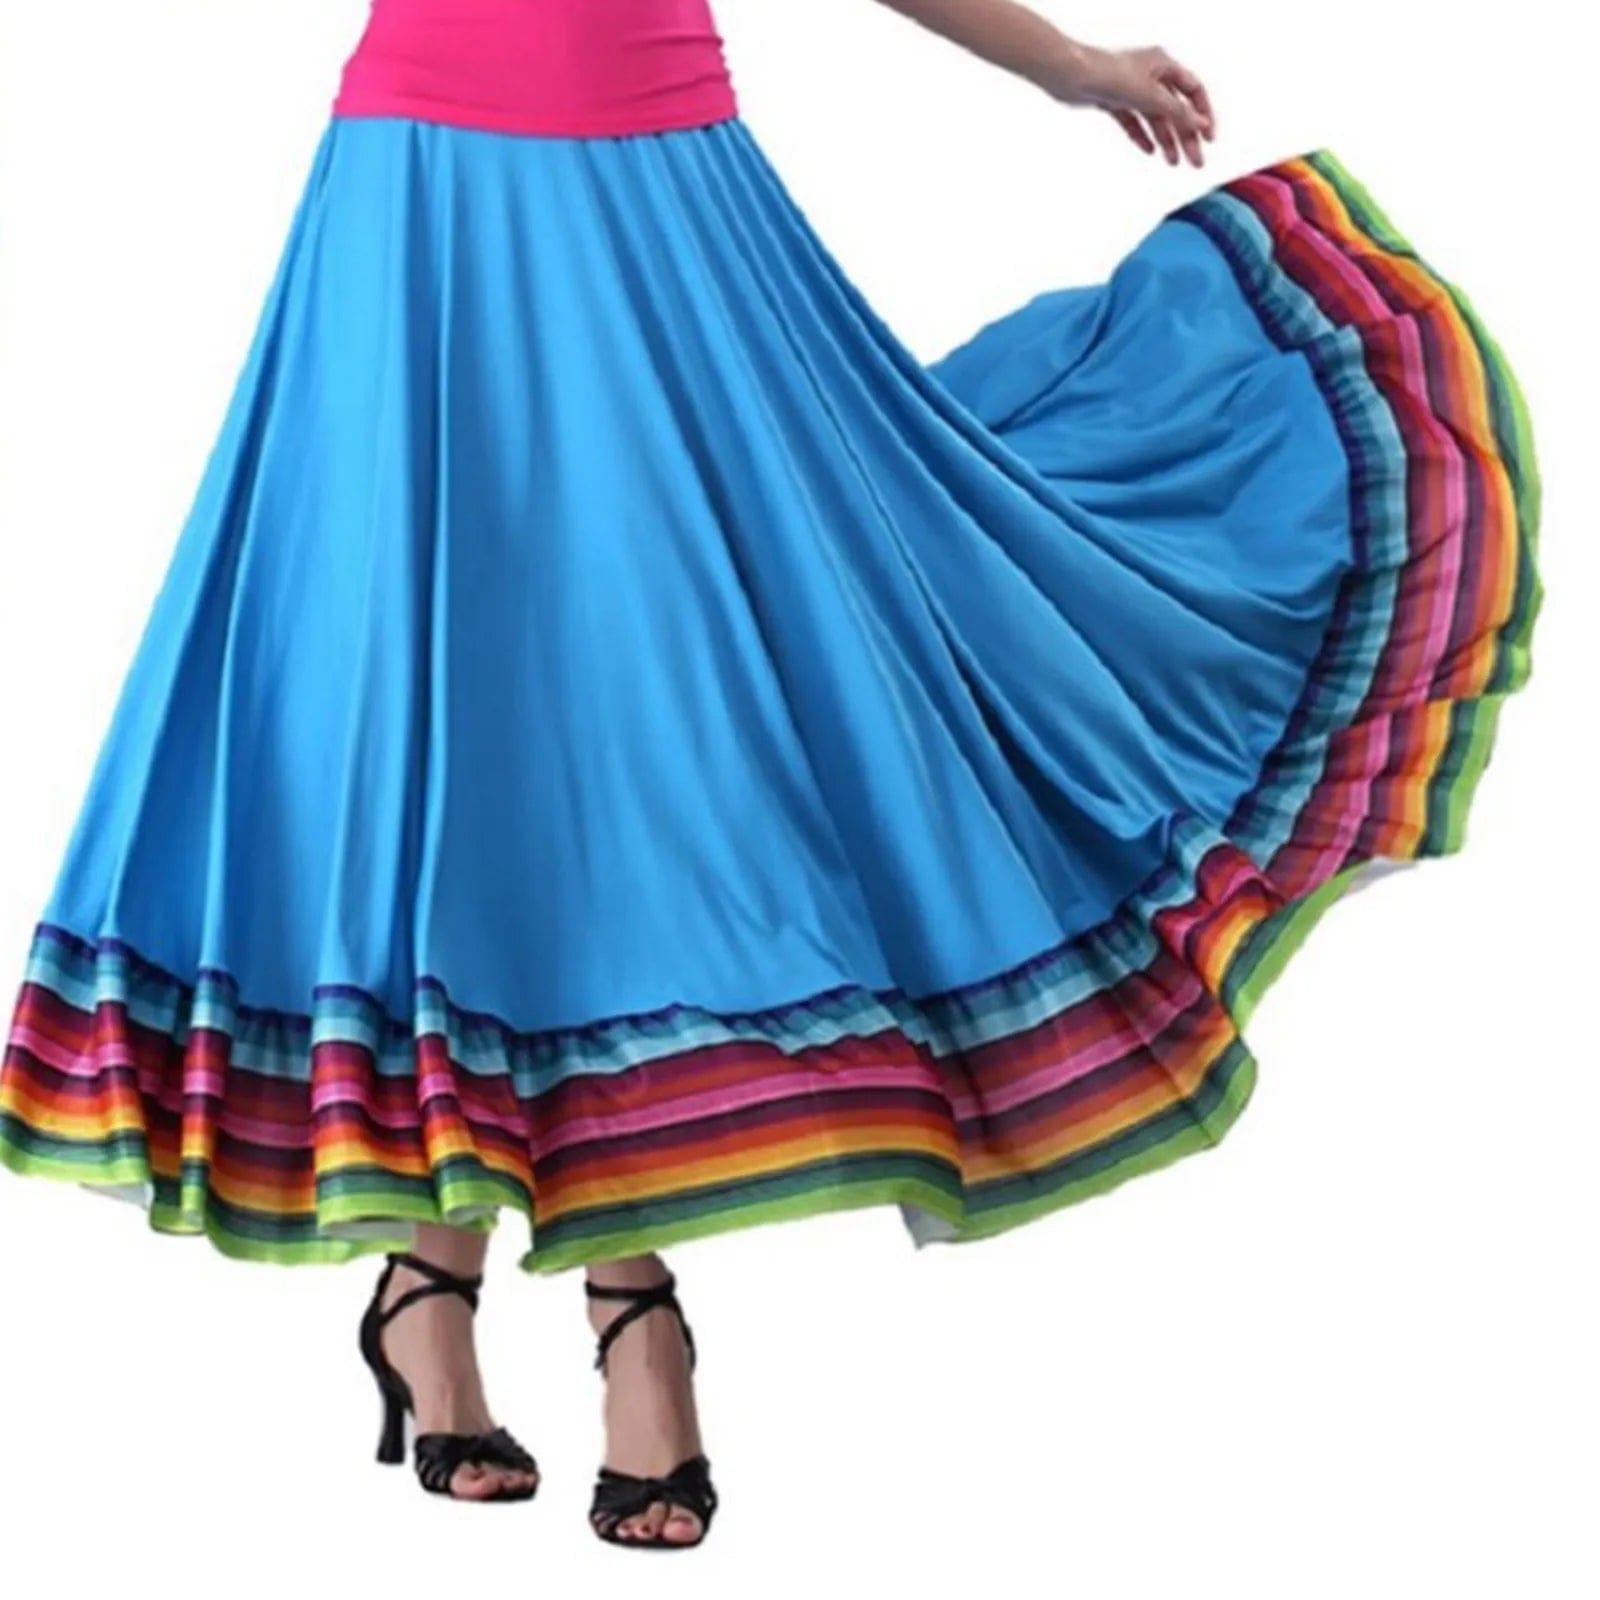 Mexican circle skirt